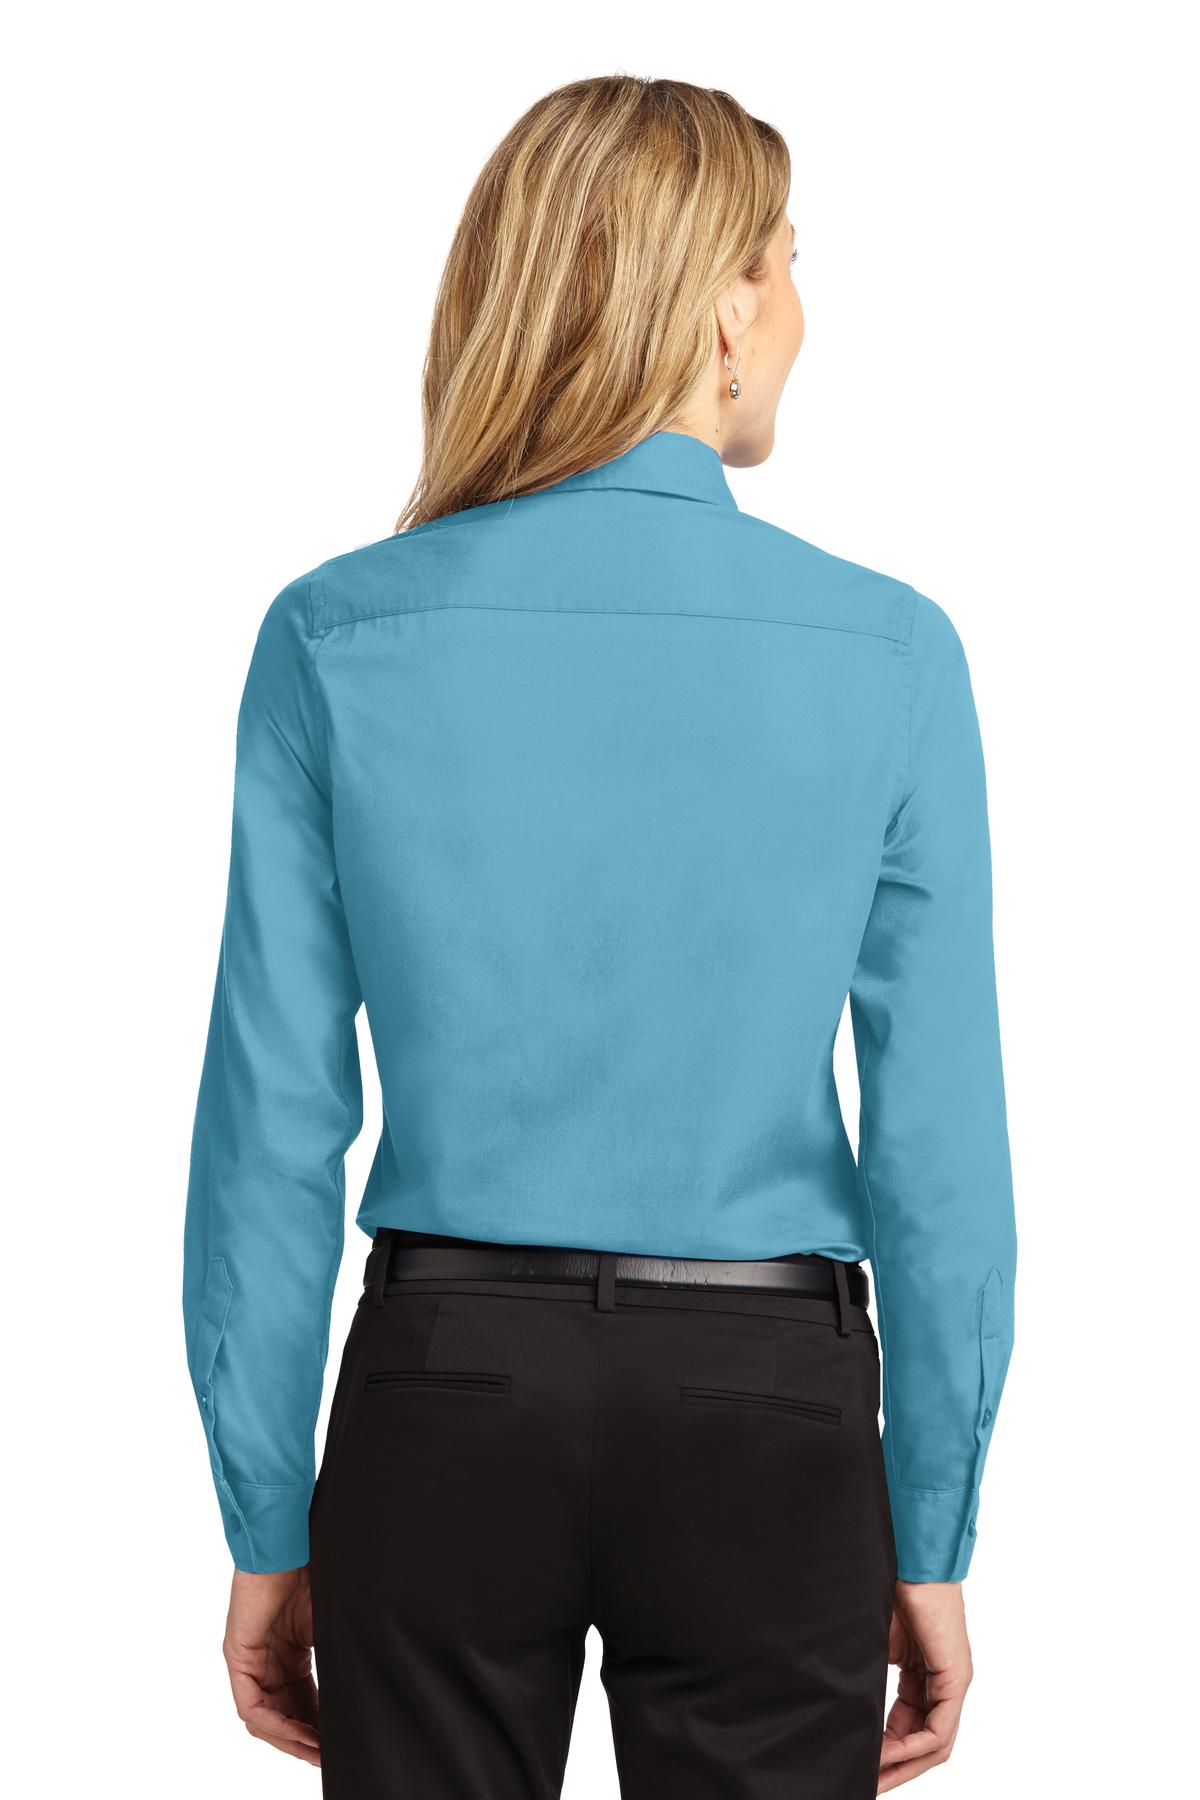 Port Authority® Ladies Long Sleeve Easy Care Shirt. L608 [Maui Blue] - DFW Impression